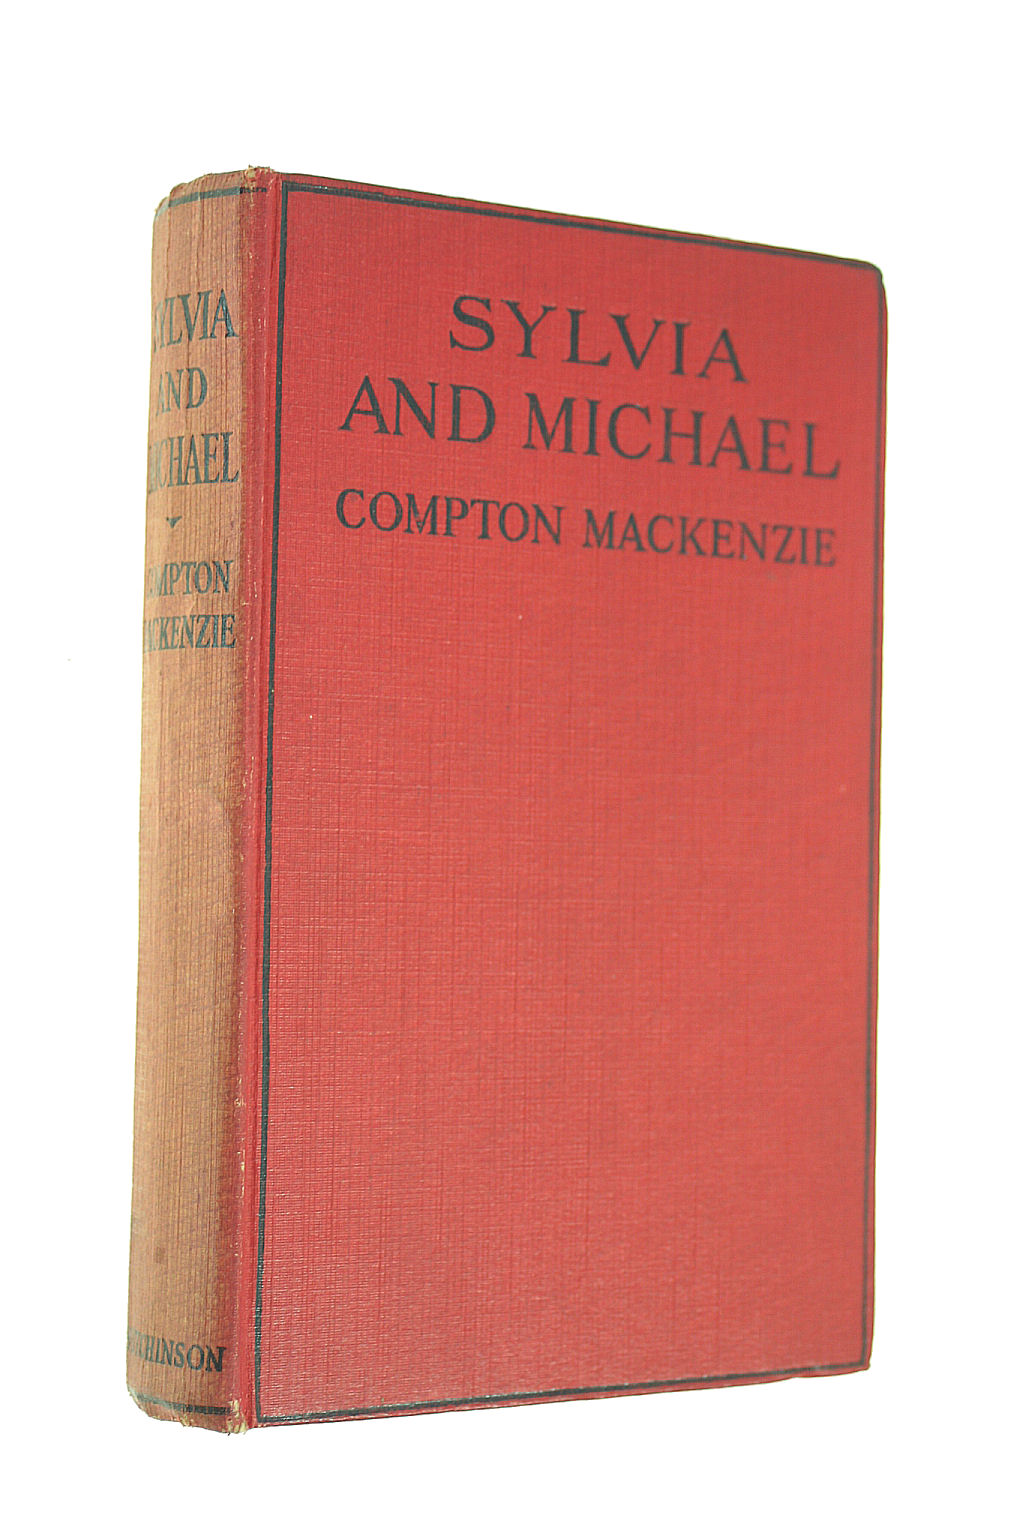 MACKENZIE, COMPTON - Sylvia and Michael: The Later Adventures of Sylvia Scarlett